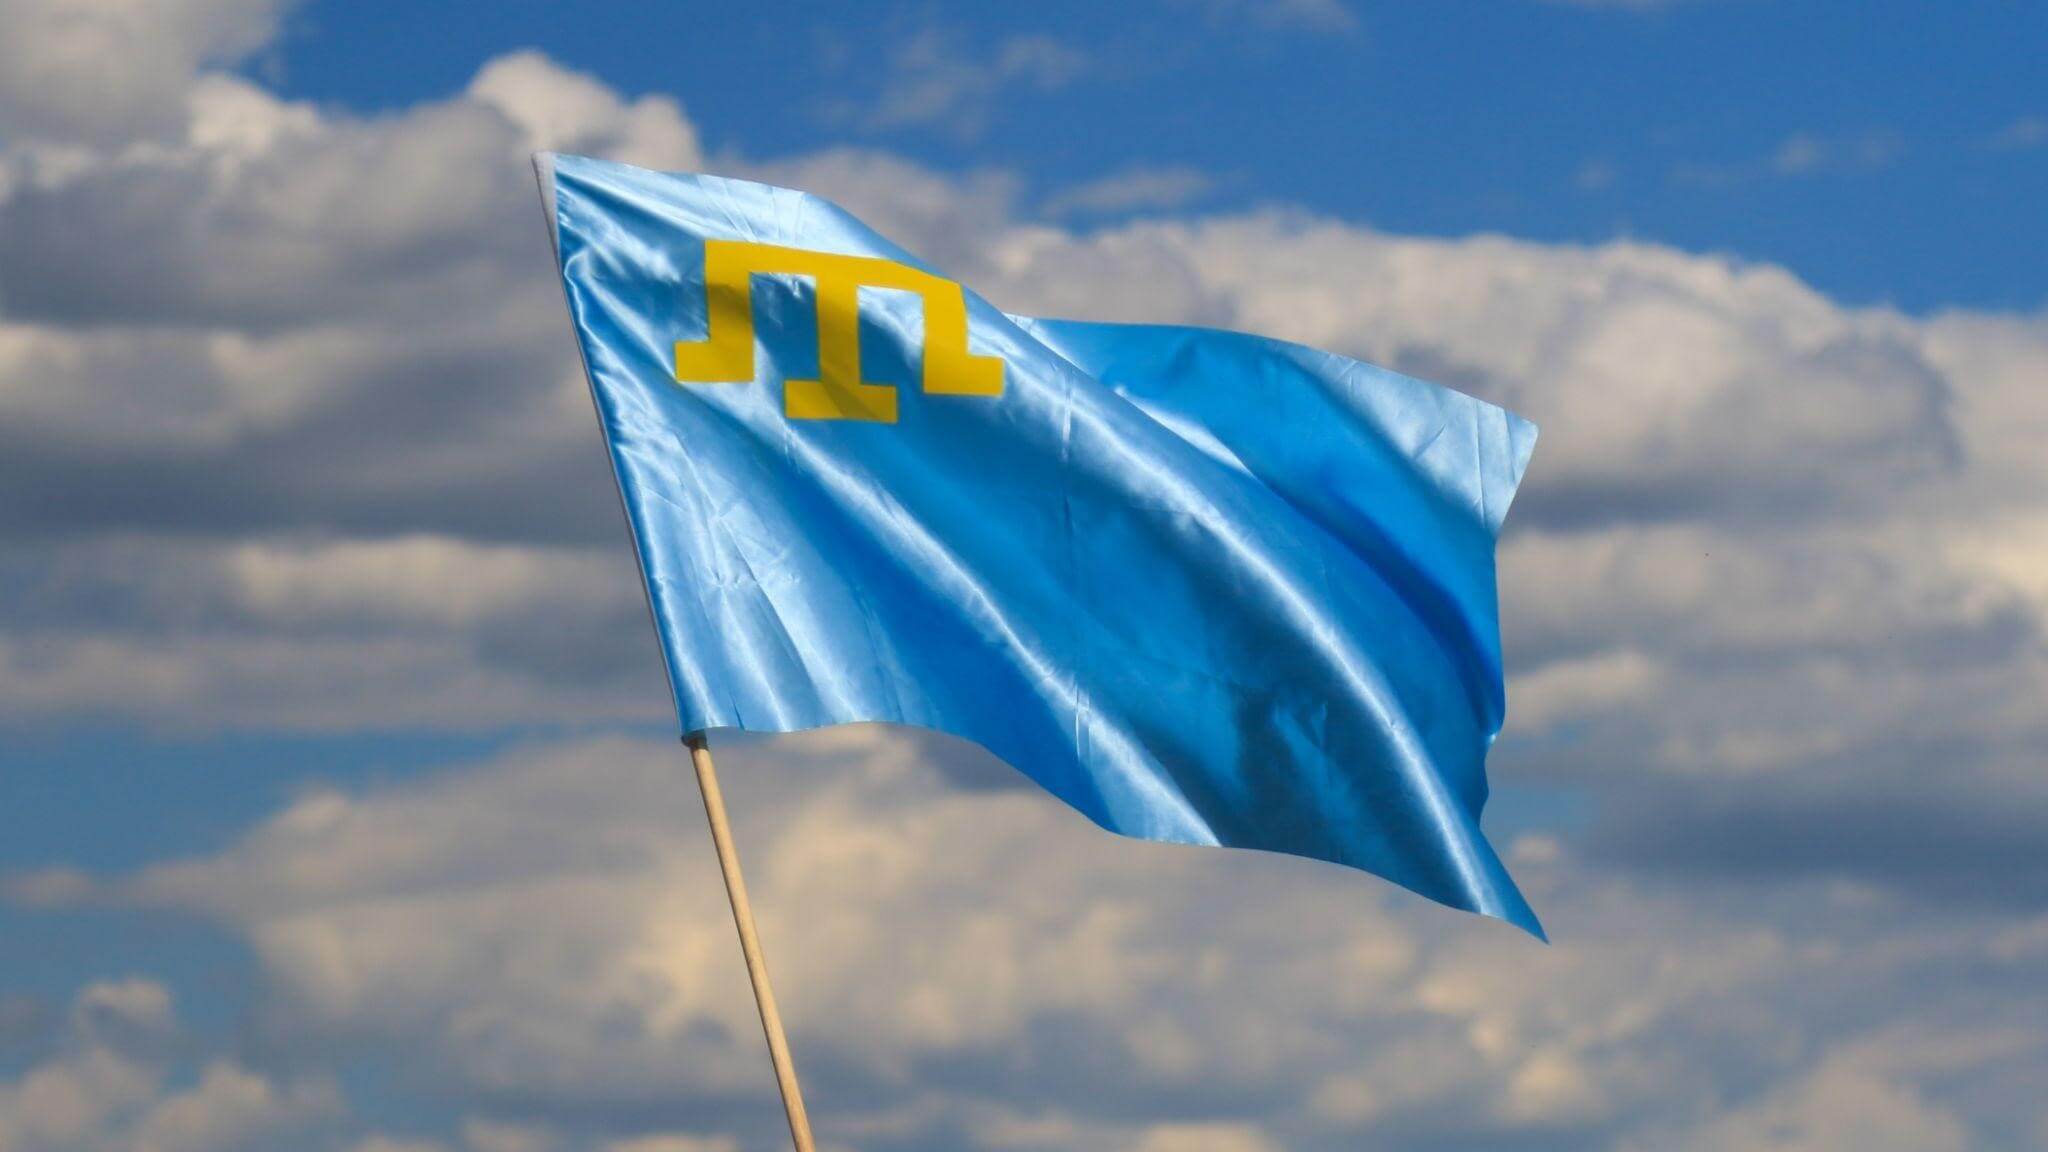 татарский флаг